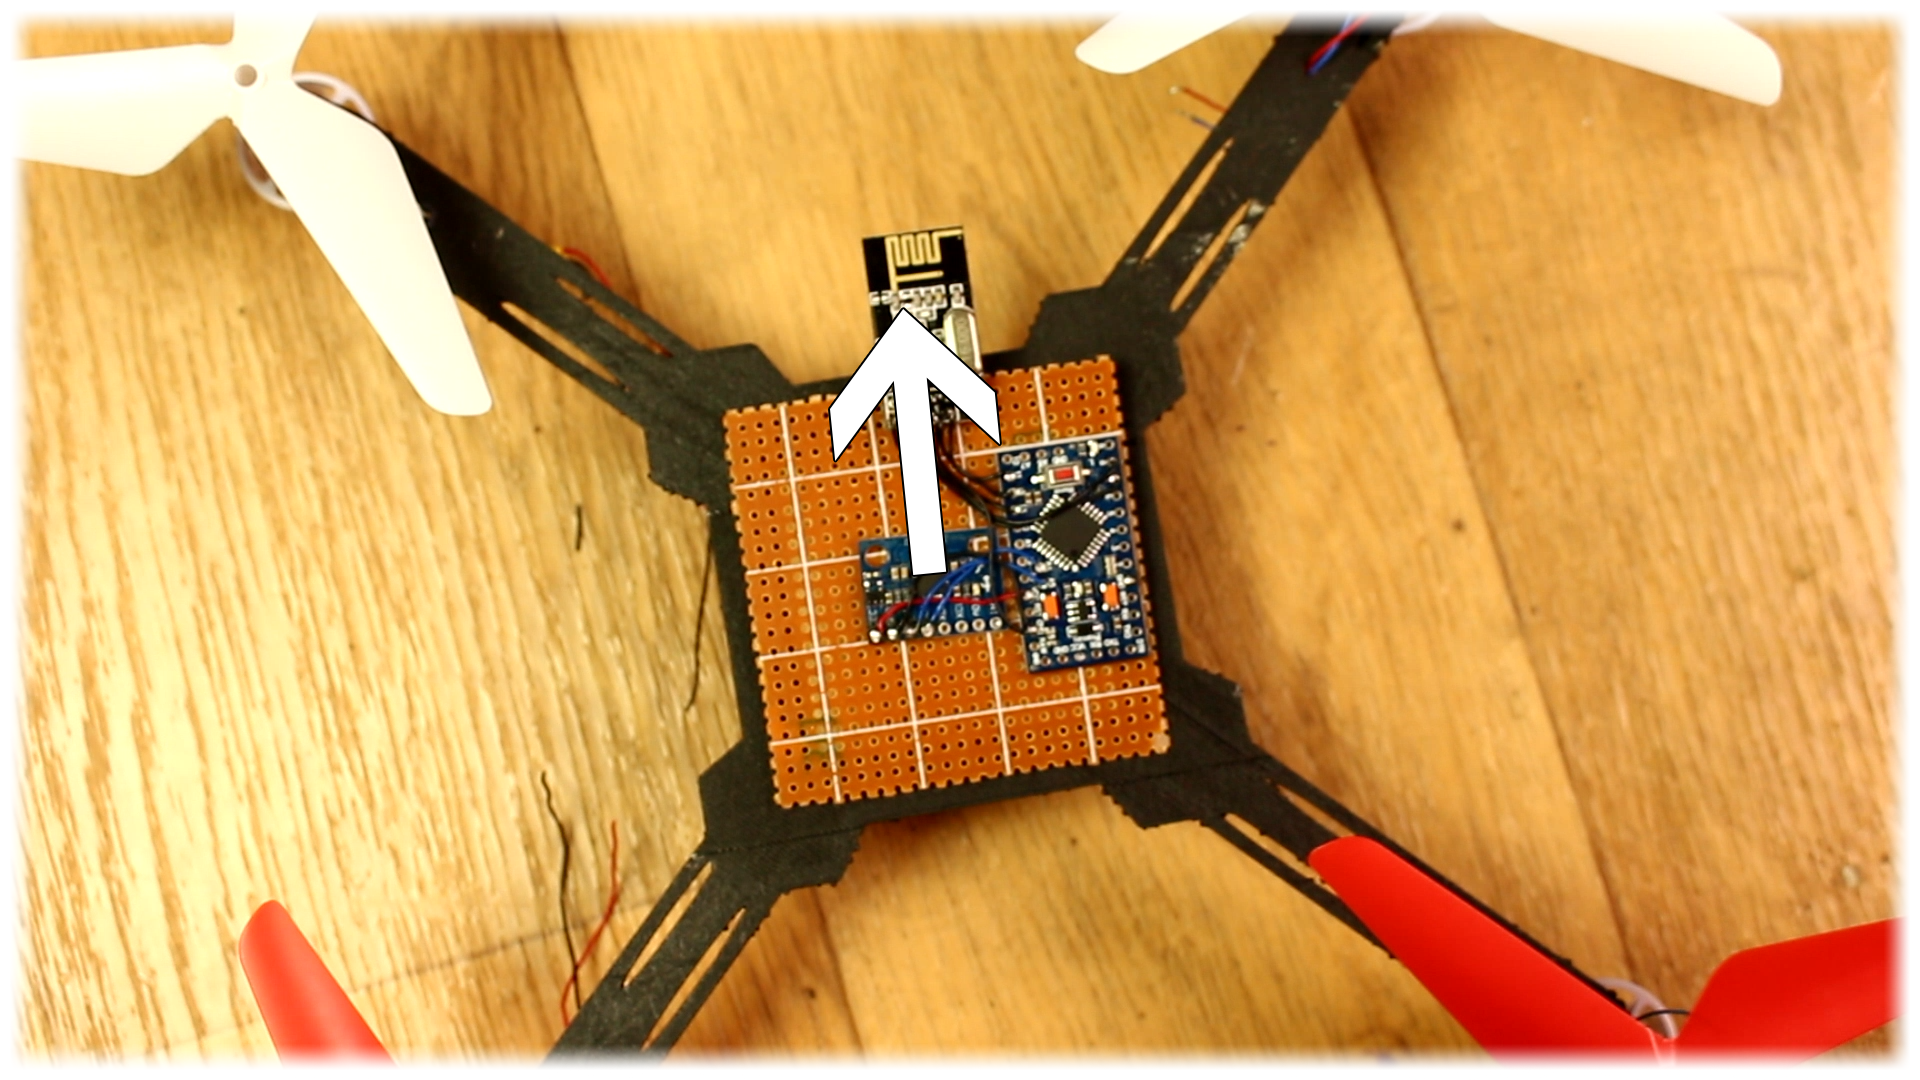 Arduino drone brushed DC motors